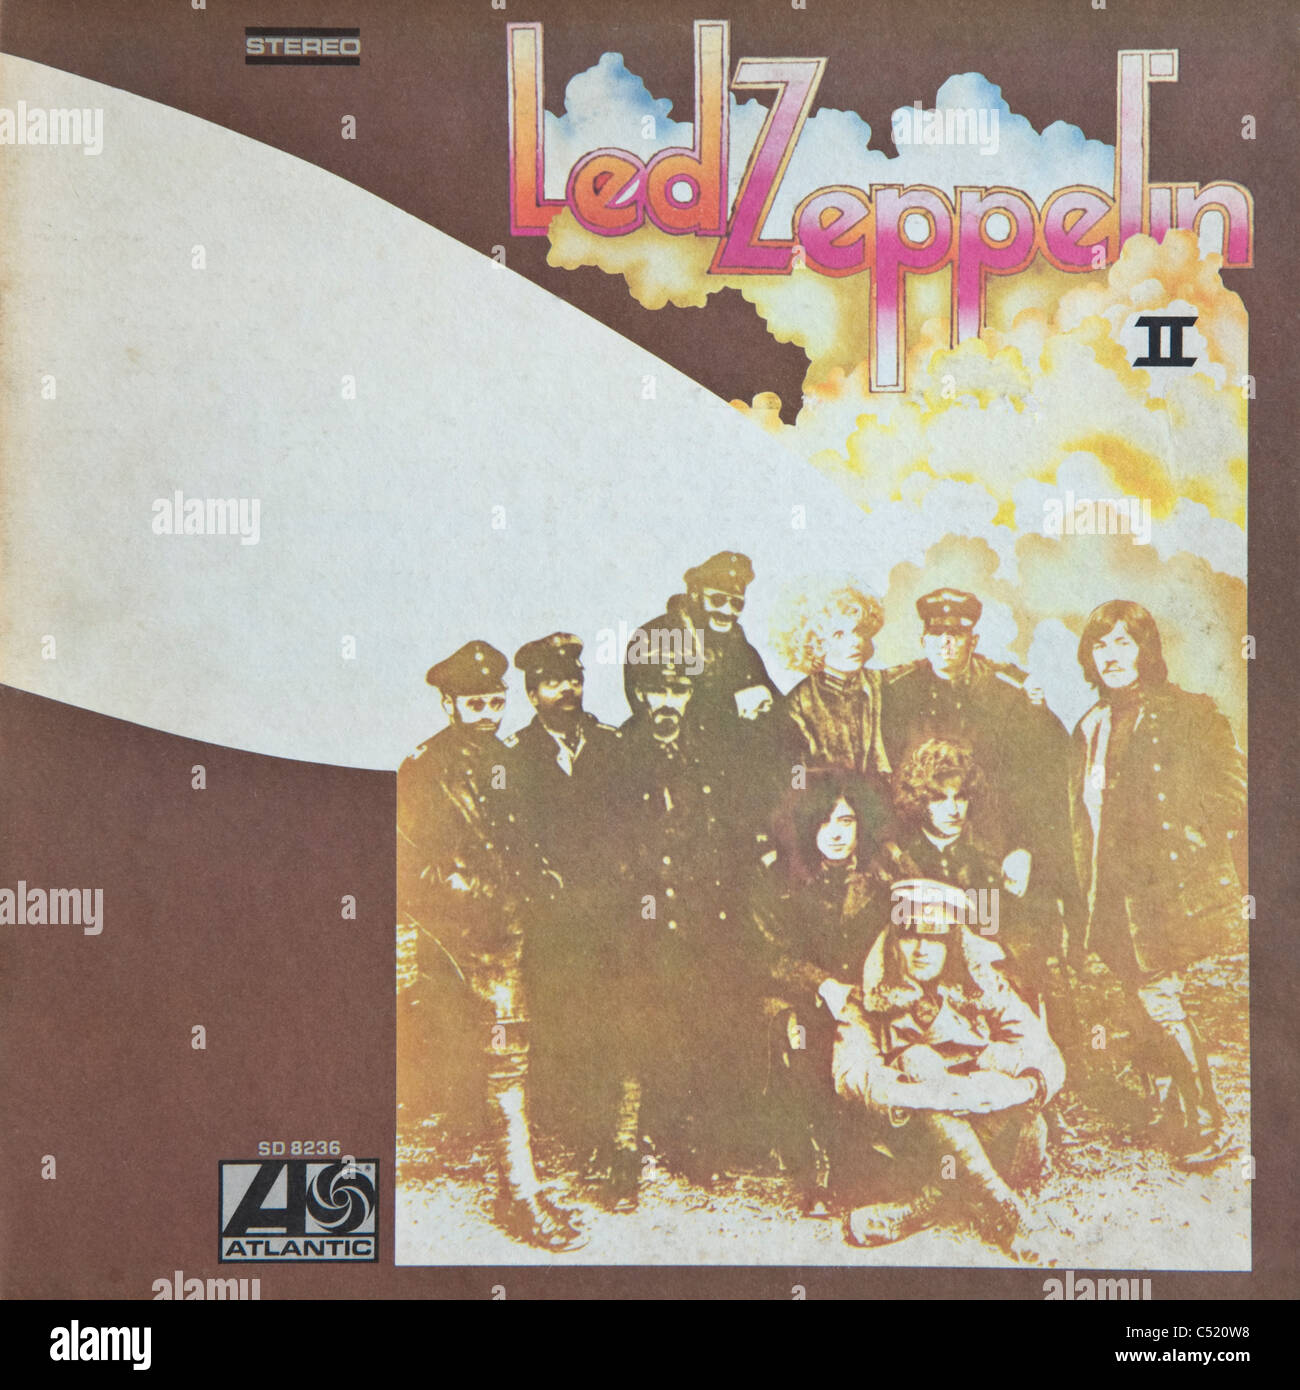 Cover of vinyl album Led Zeppelin II by Led Zeppelin released 1969 on Atlantic Records Stock Photo